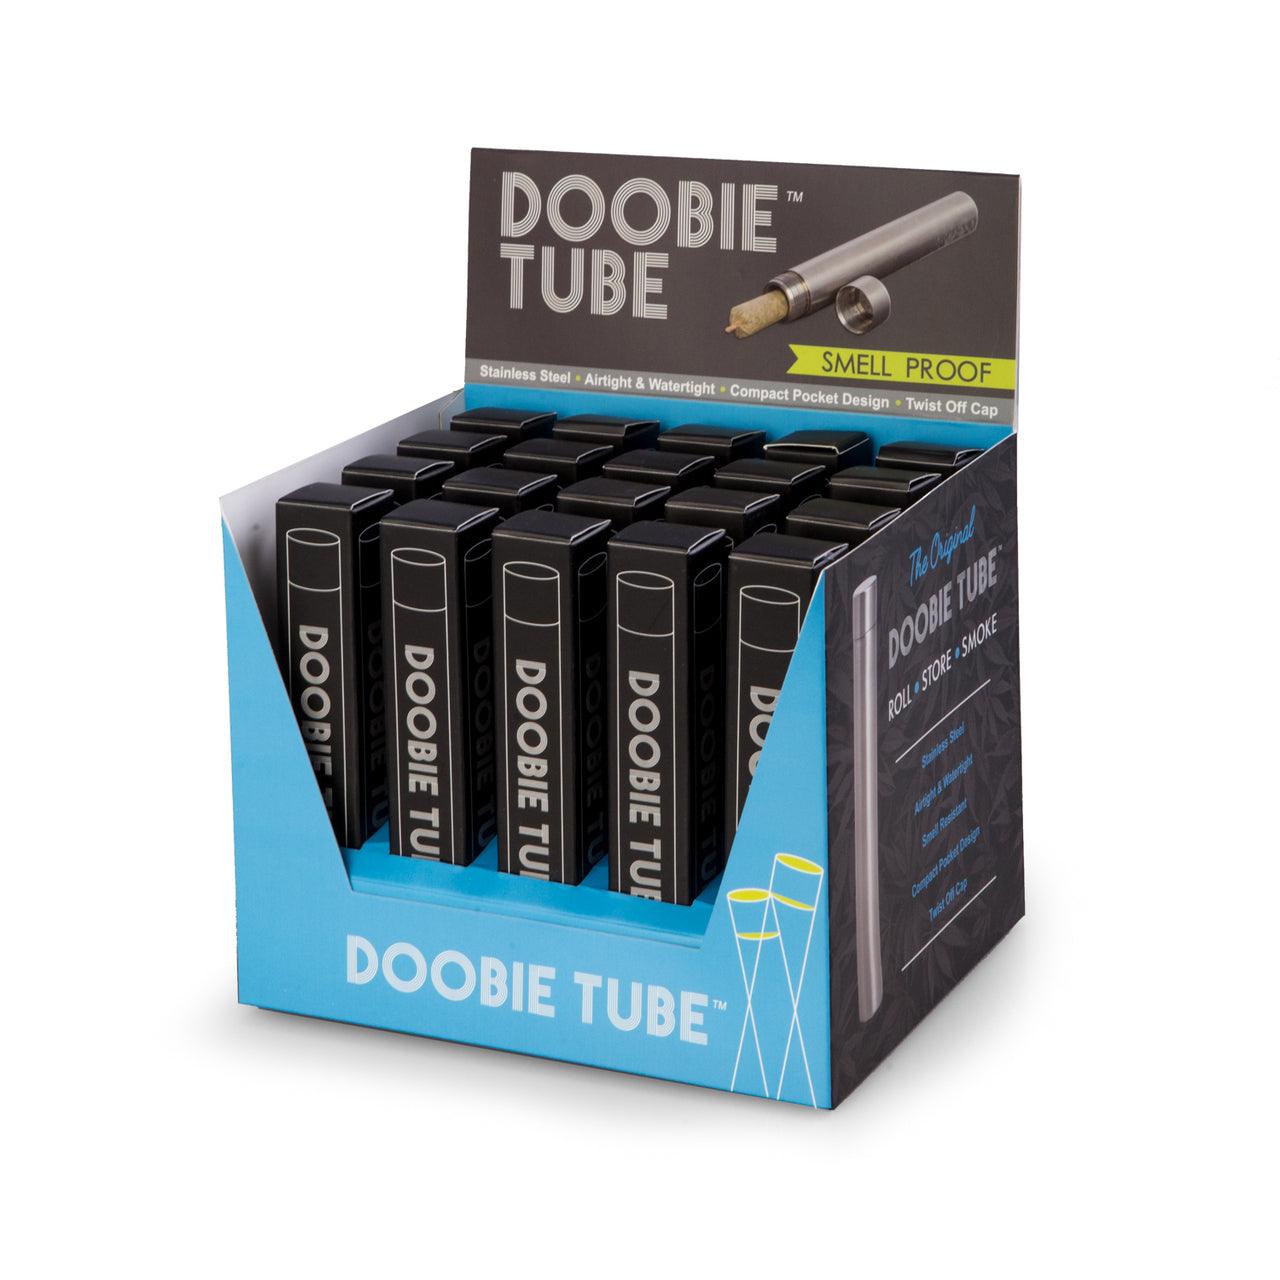 Bey Berk "Doobie" Tube-Pack Of 20, Cylinder for Joints Or Pre-Rolled Cigarettes by Bey Berk